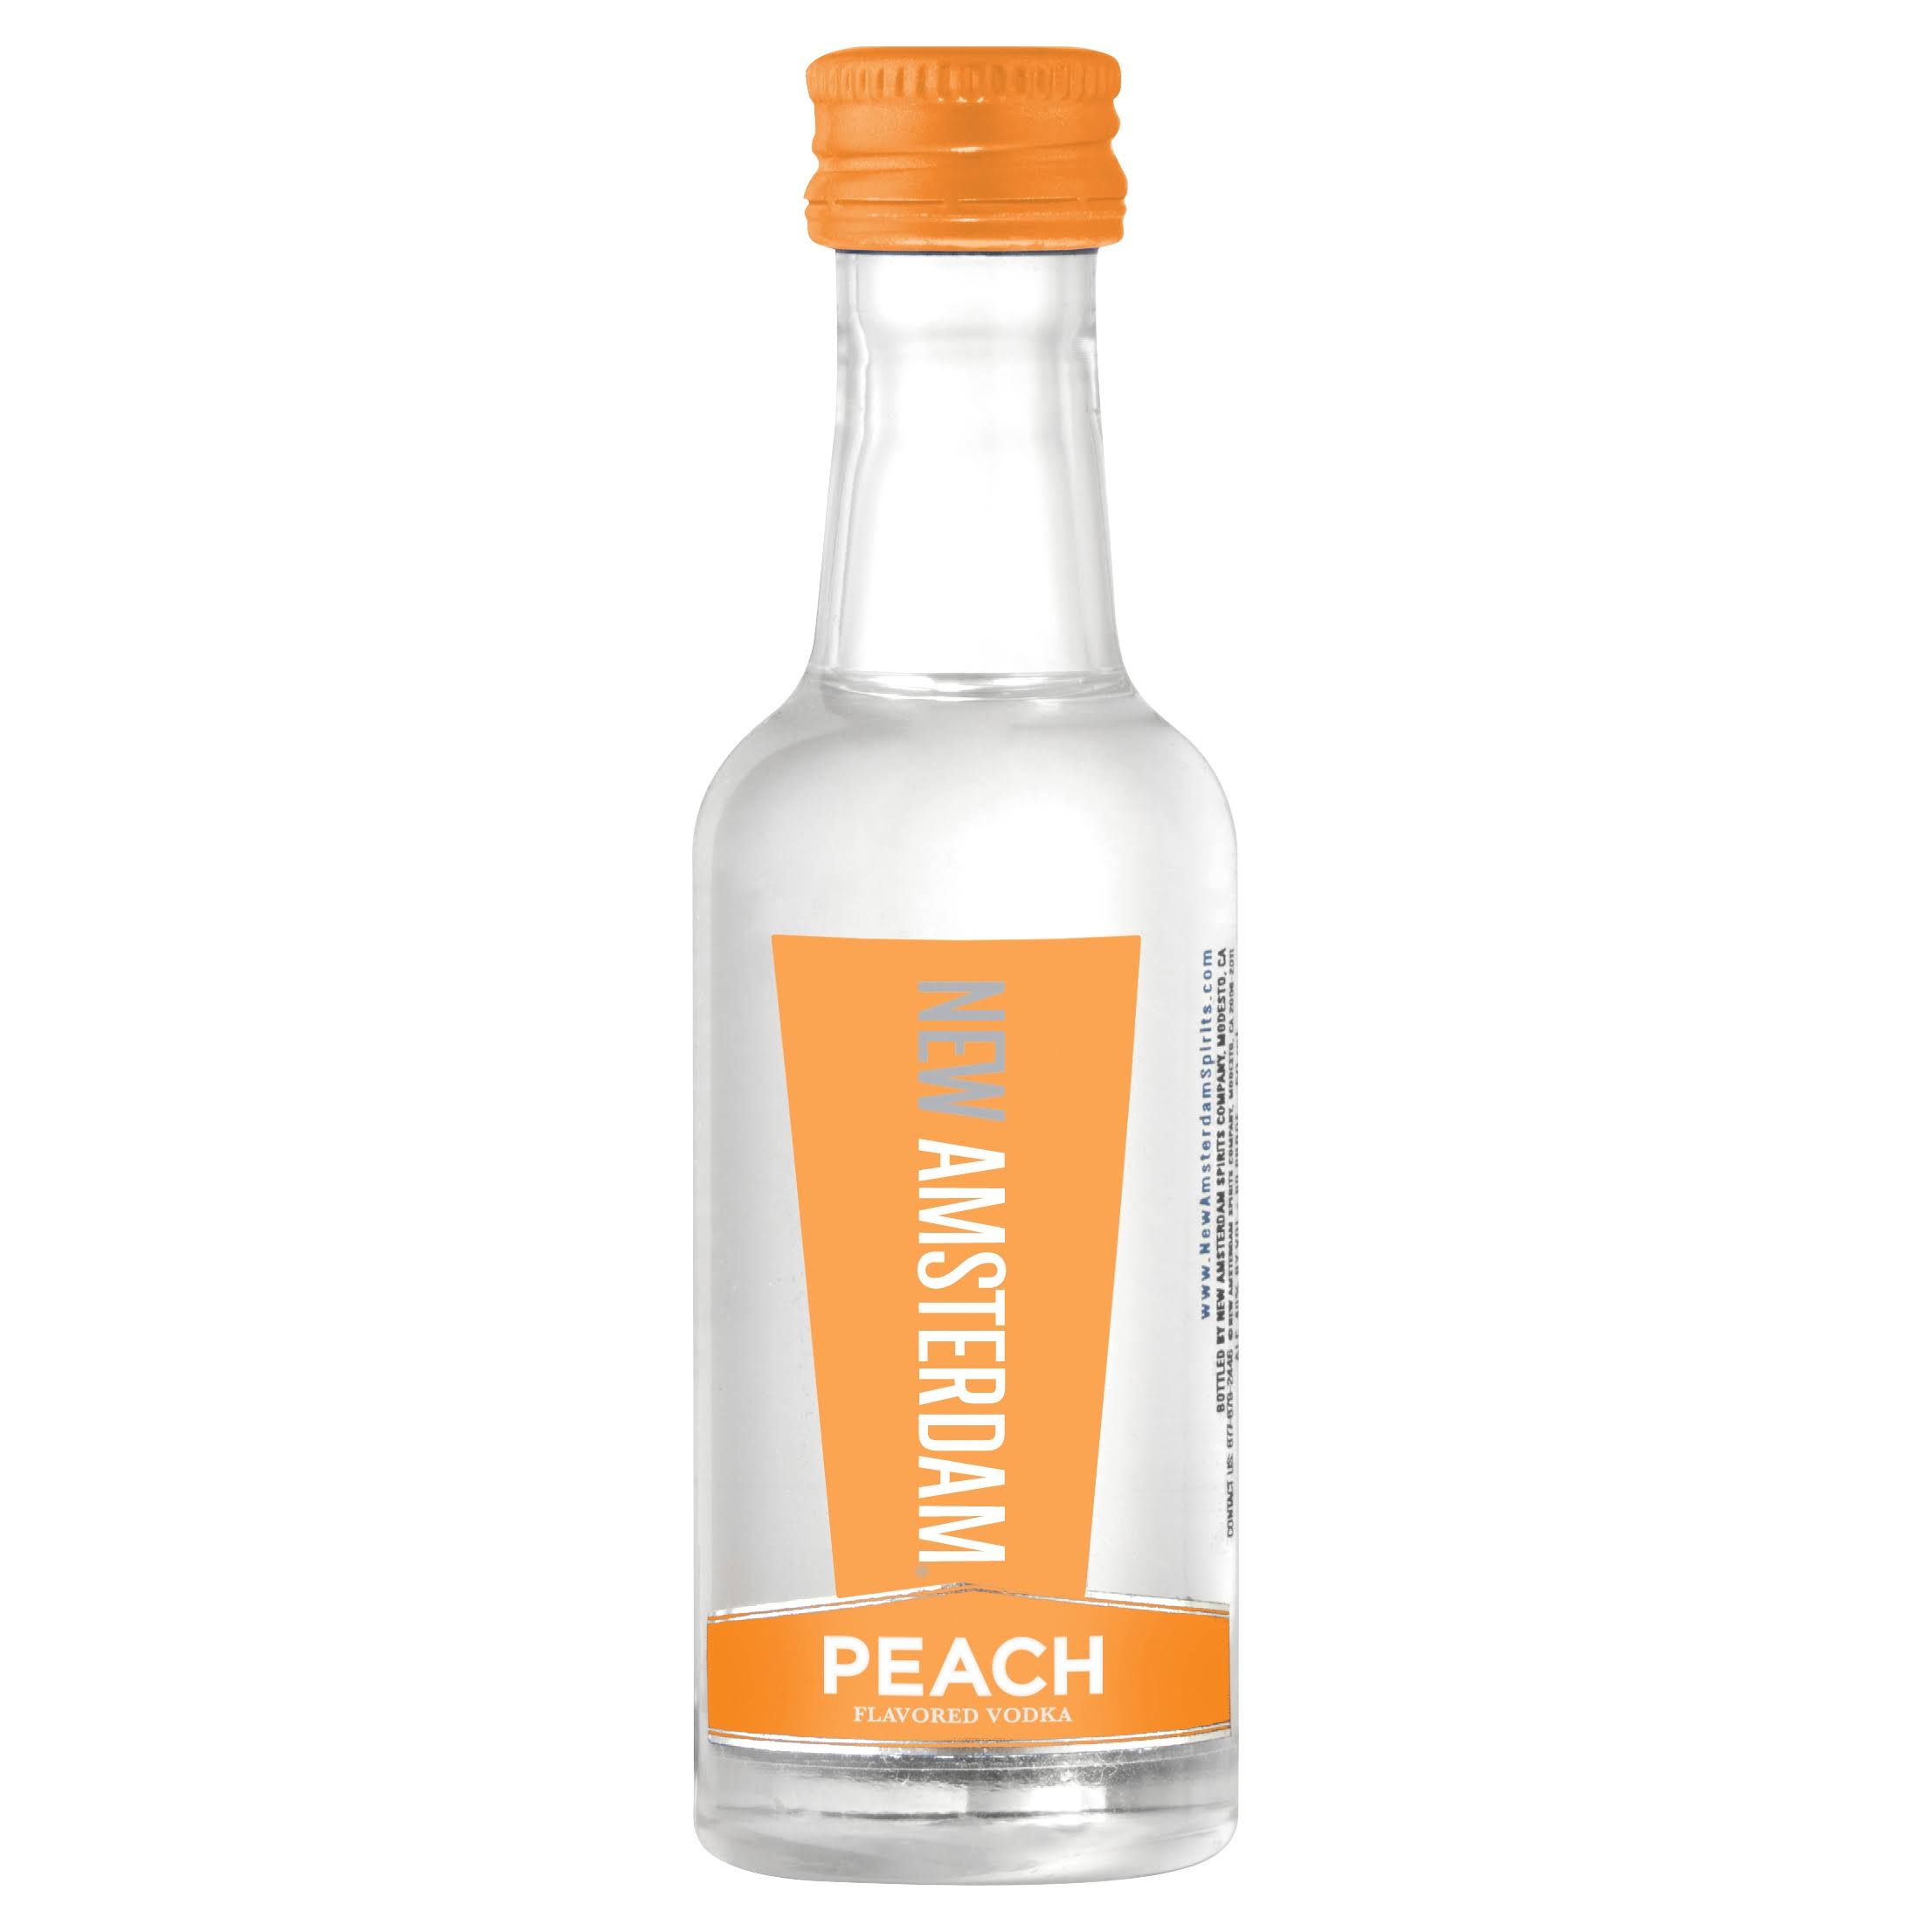 New Amsterdam Vodka, Peach Flavored